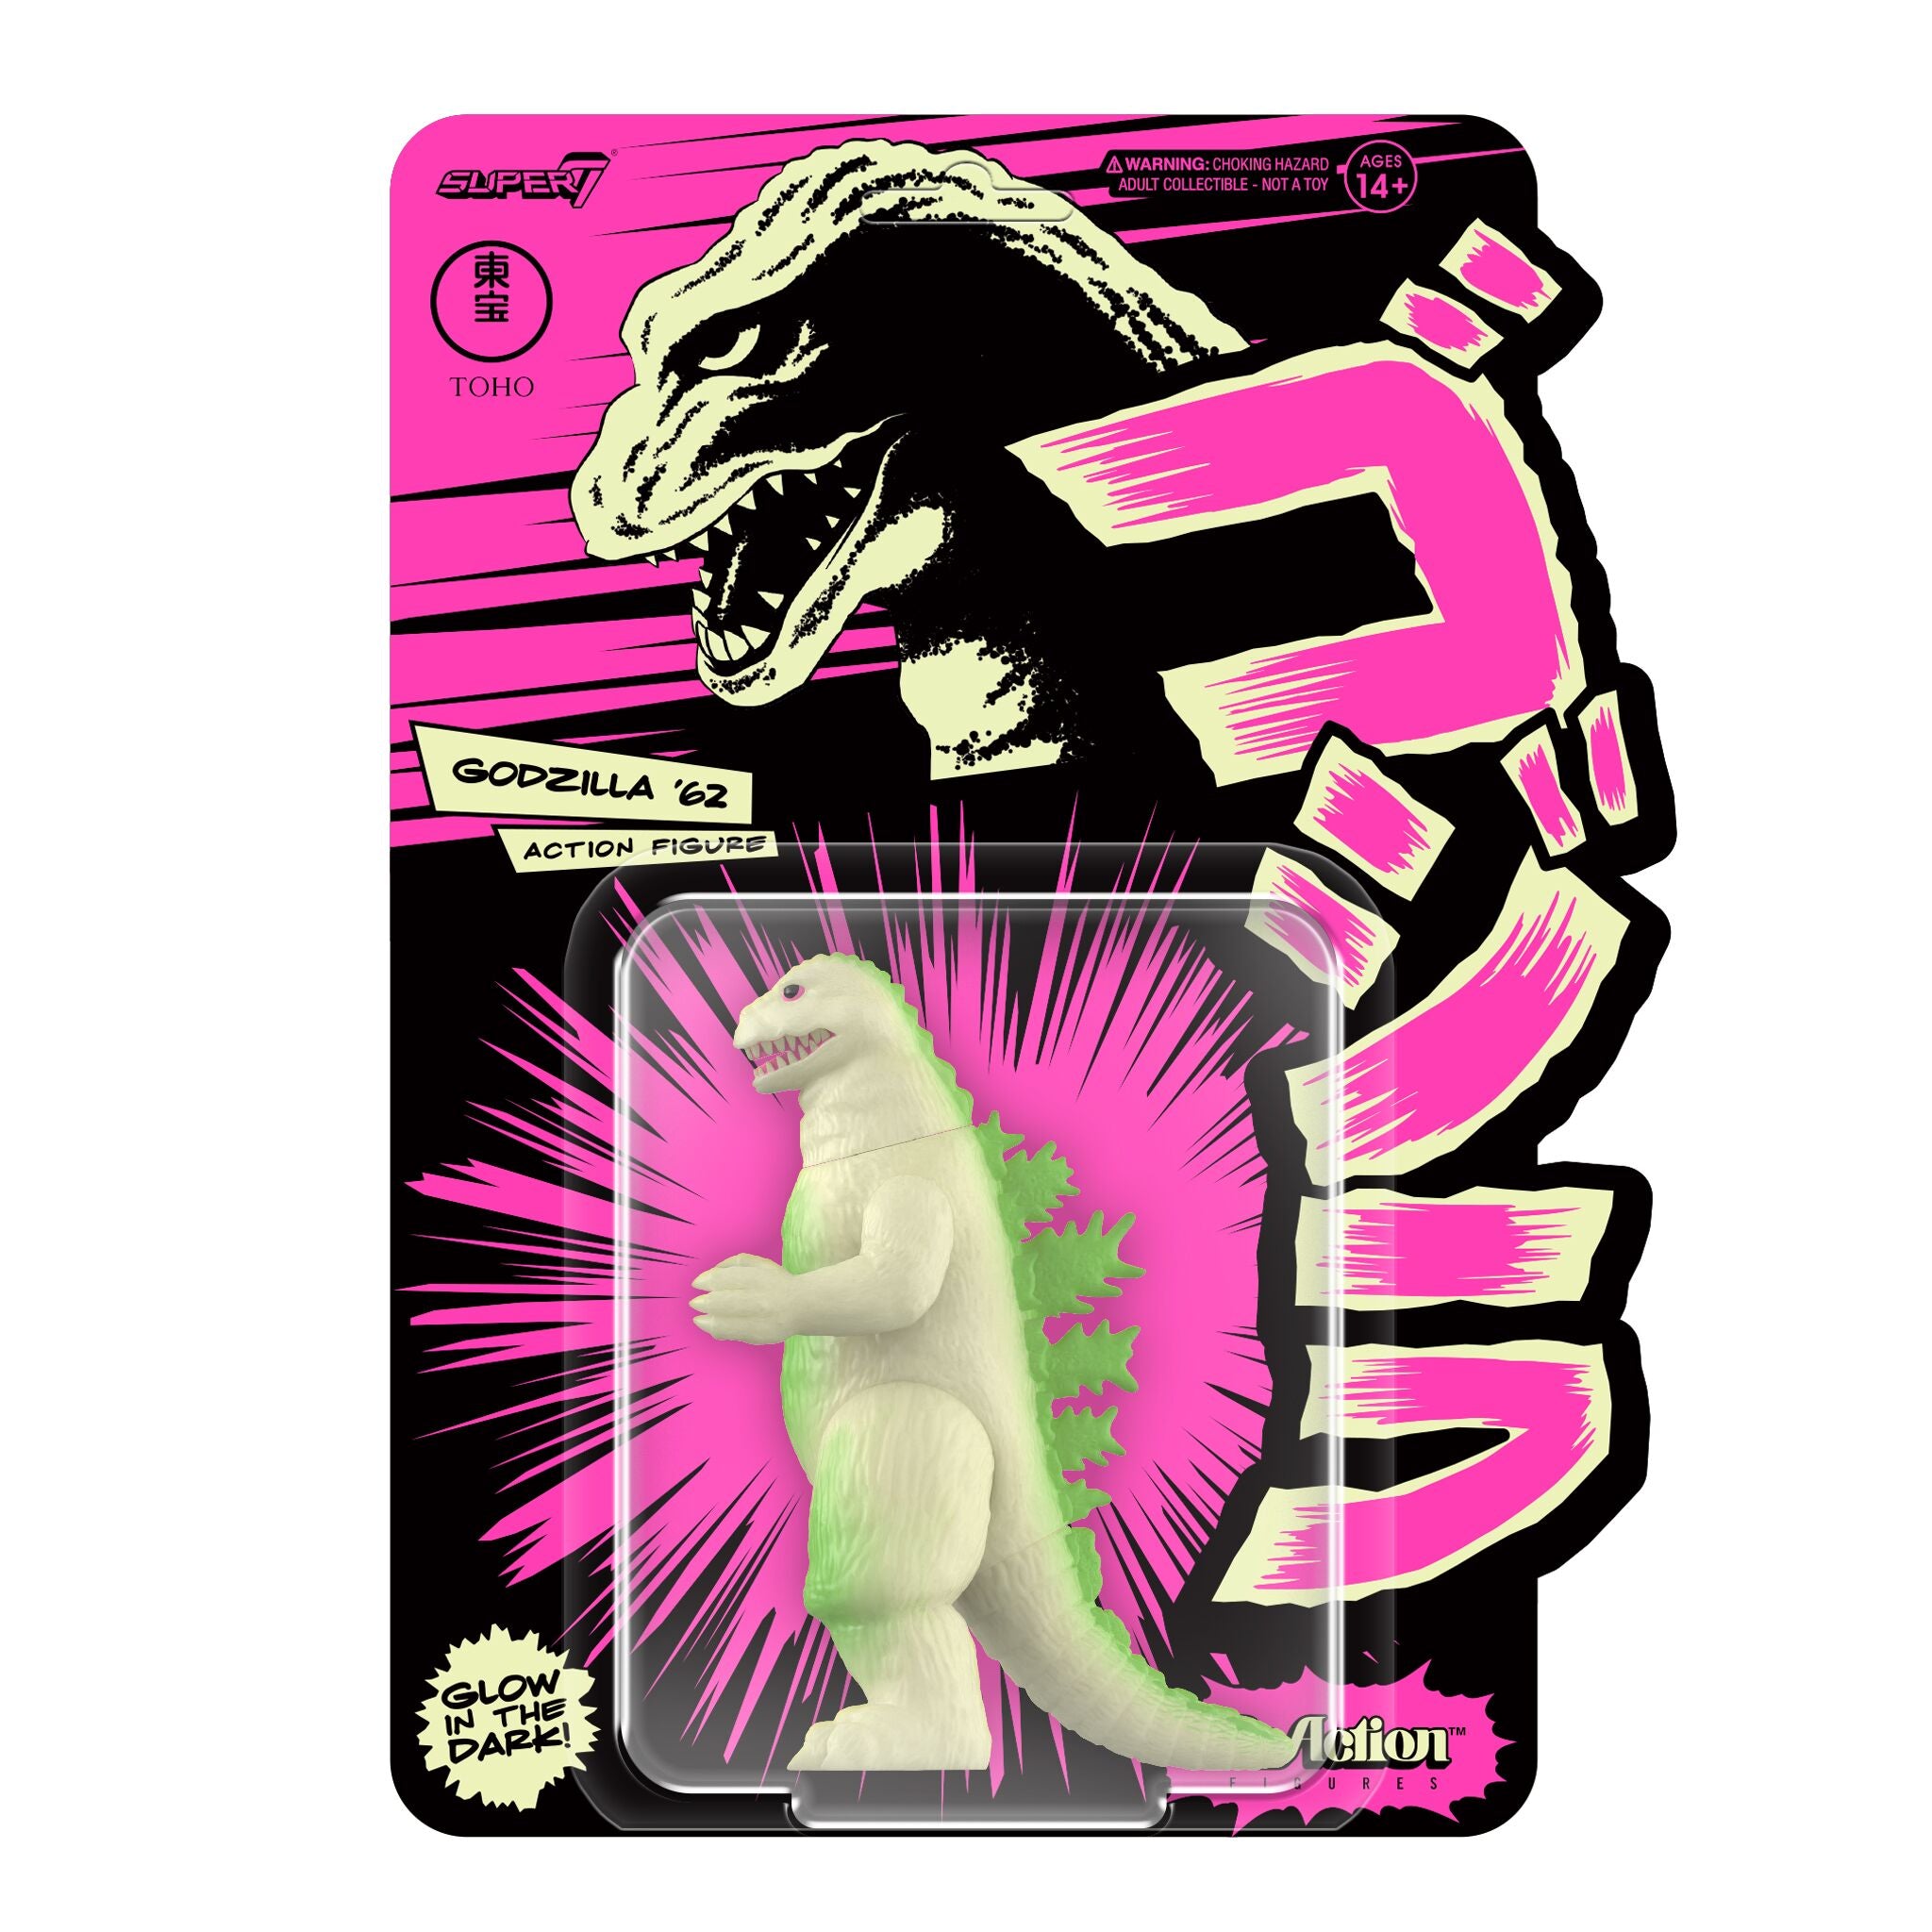 Toho ReAction Figures Wave 4 - Godzilla '62 (Glow)